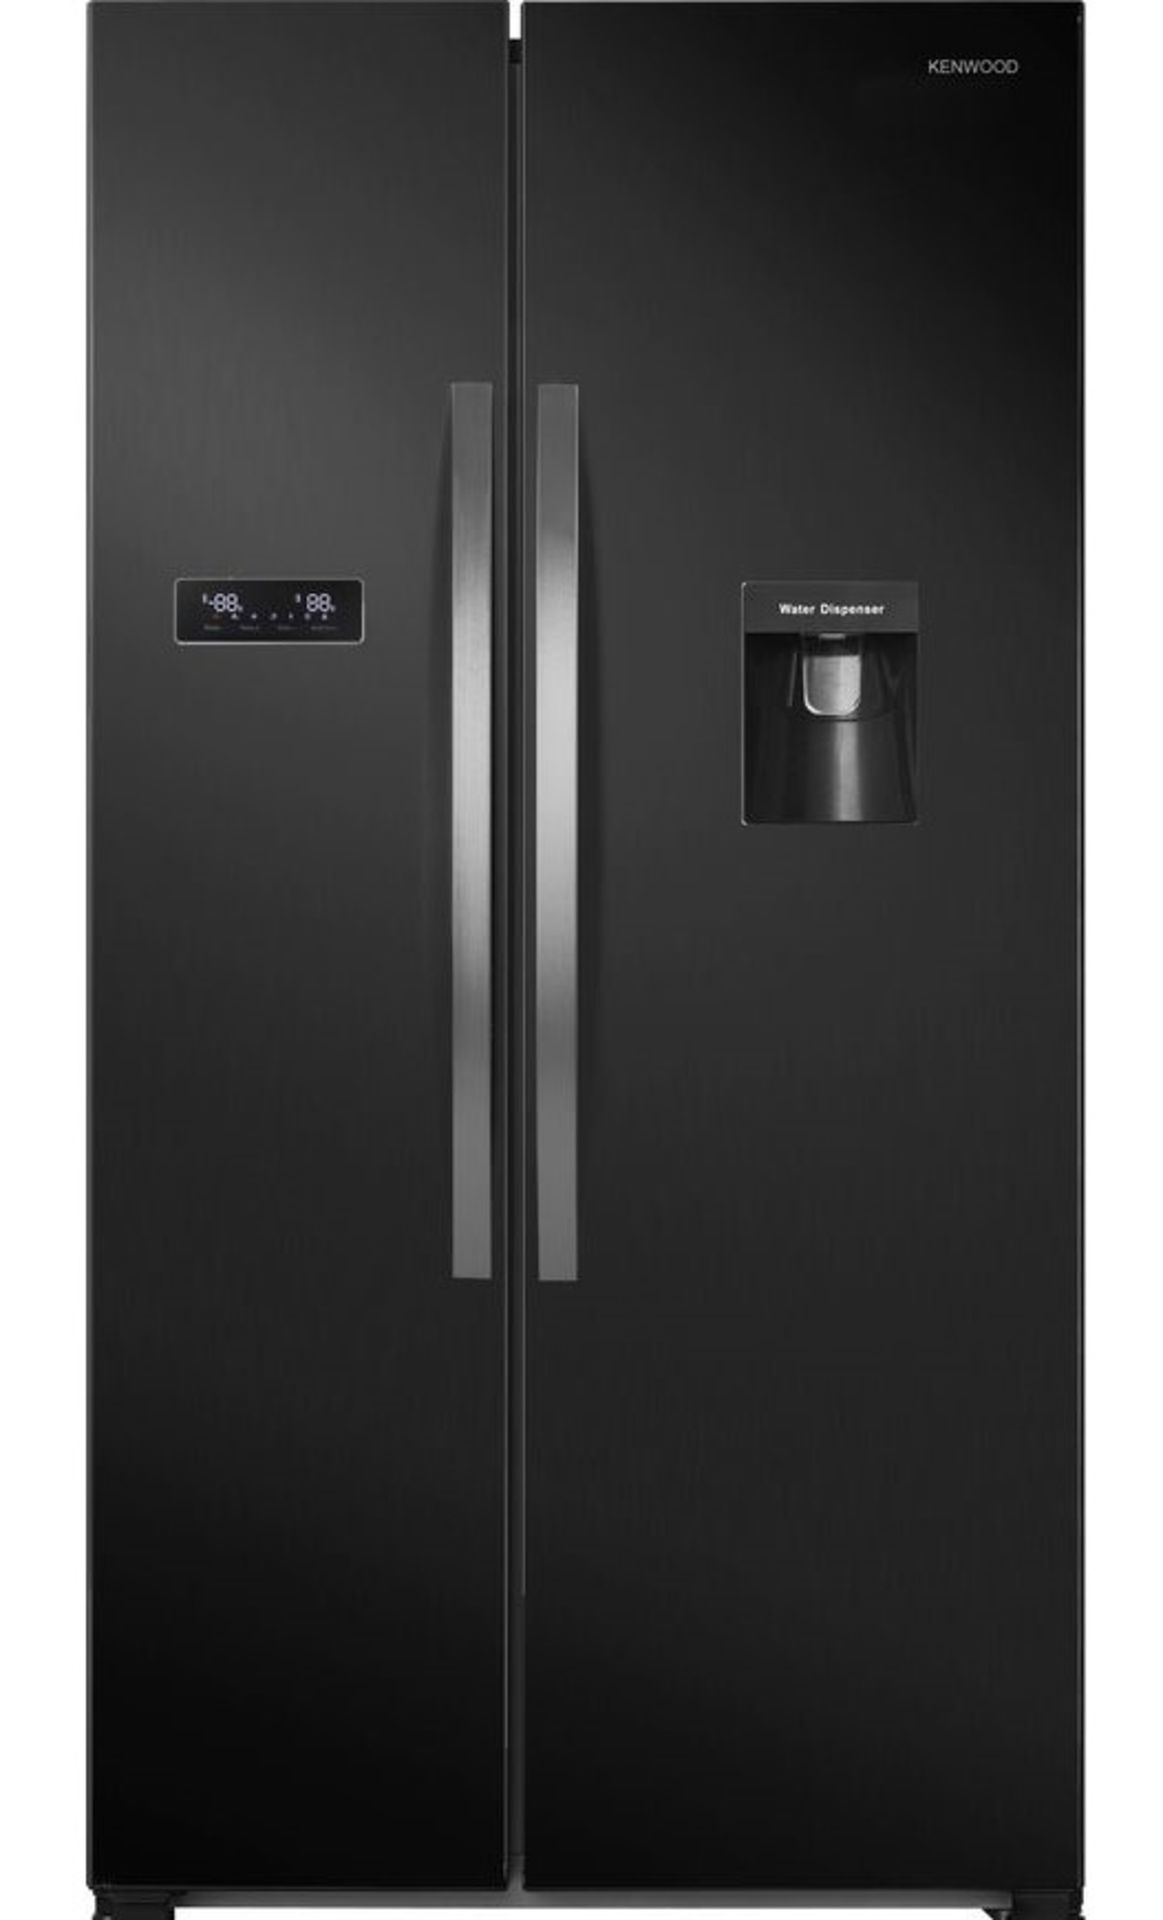 1 x Kenwood KSBSDB19 Gloss Black American Style Fridge Freezer With Water Dispenser